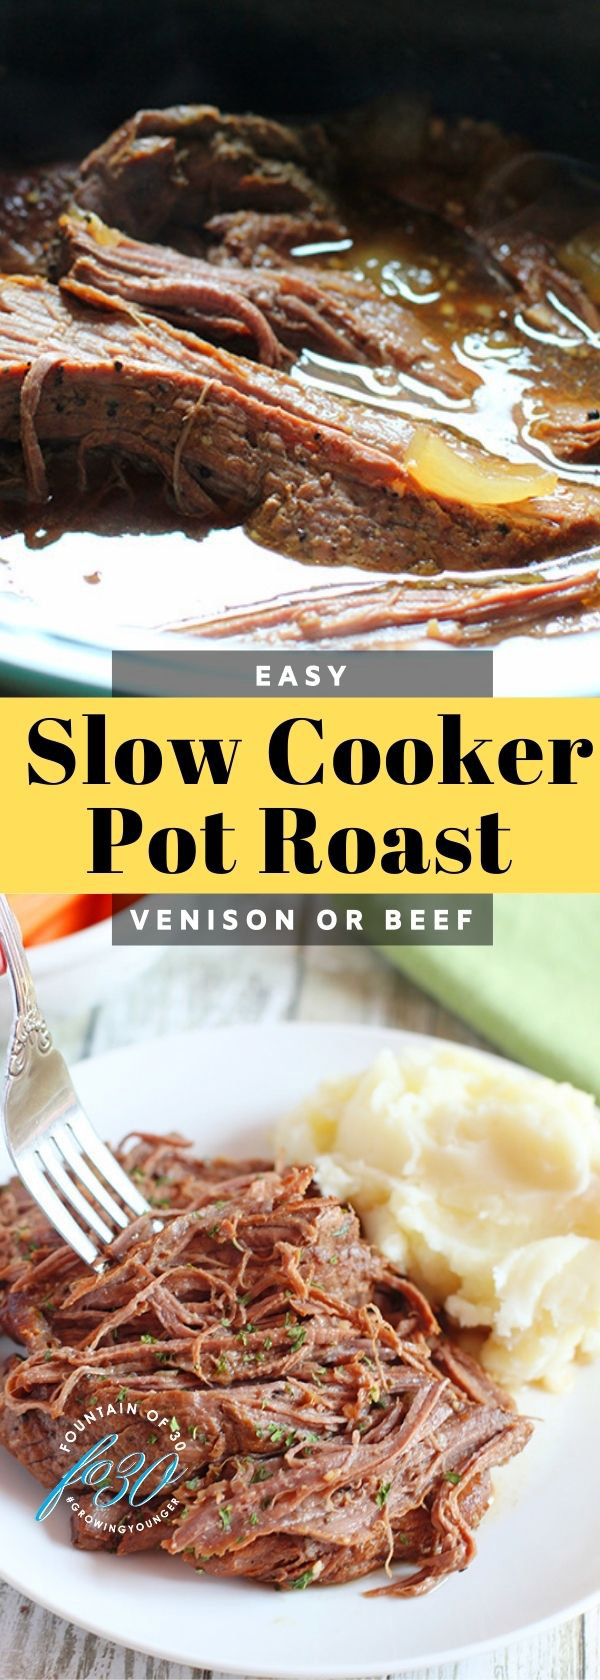 slow cooker pot roast fountainof30